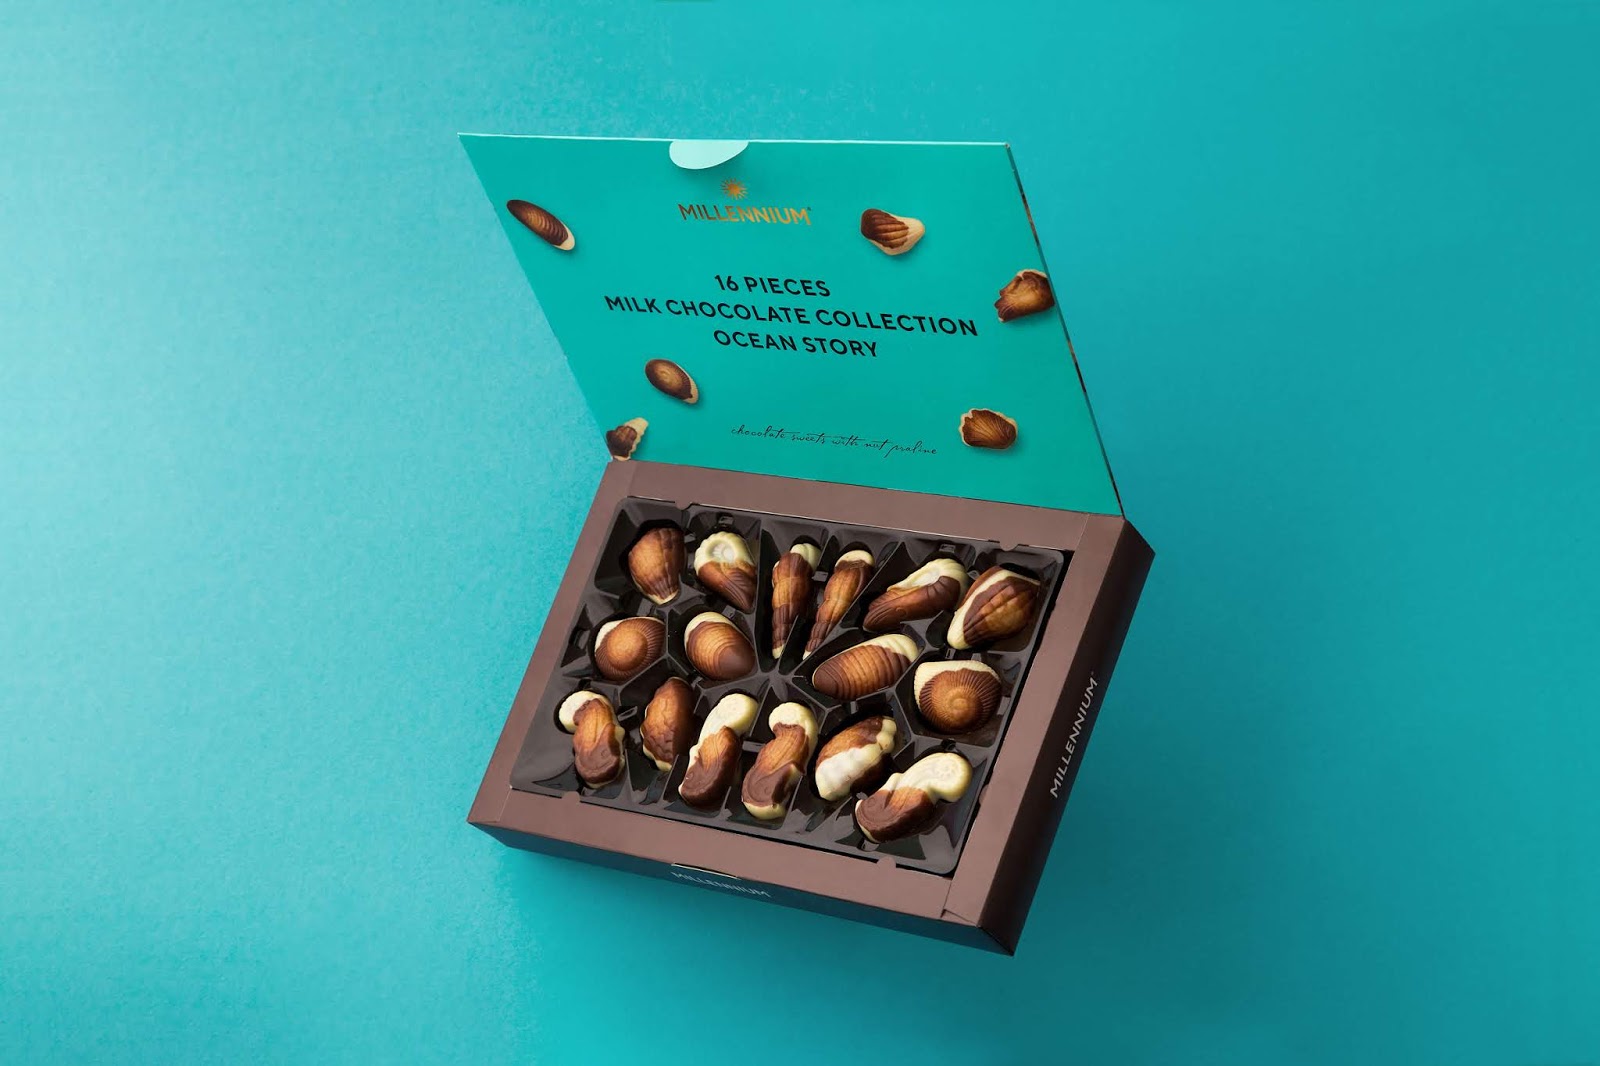 Millennium巧克力包装盒设计